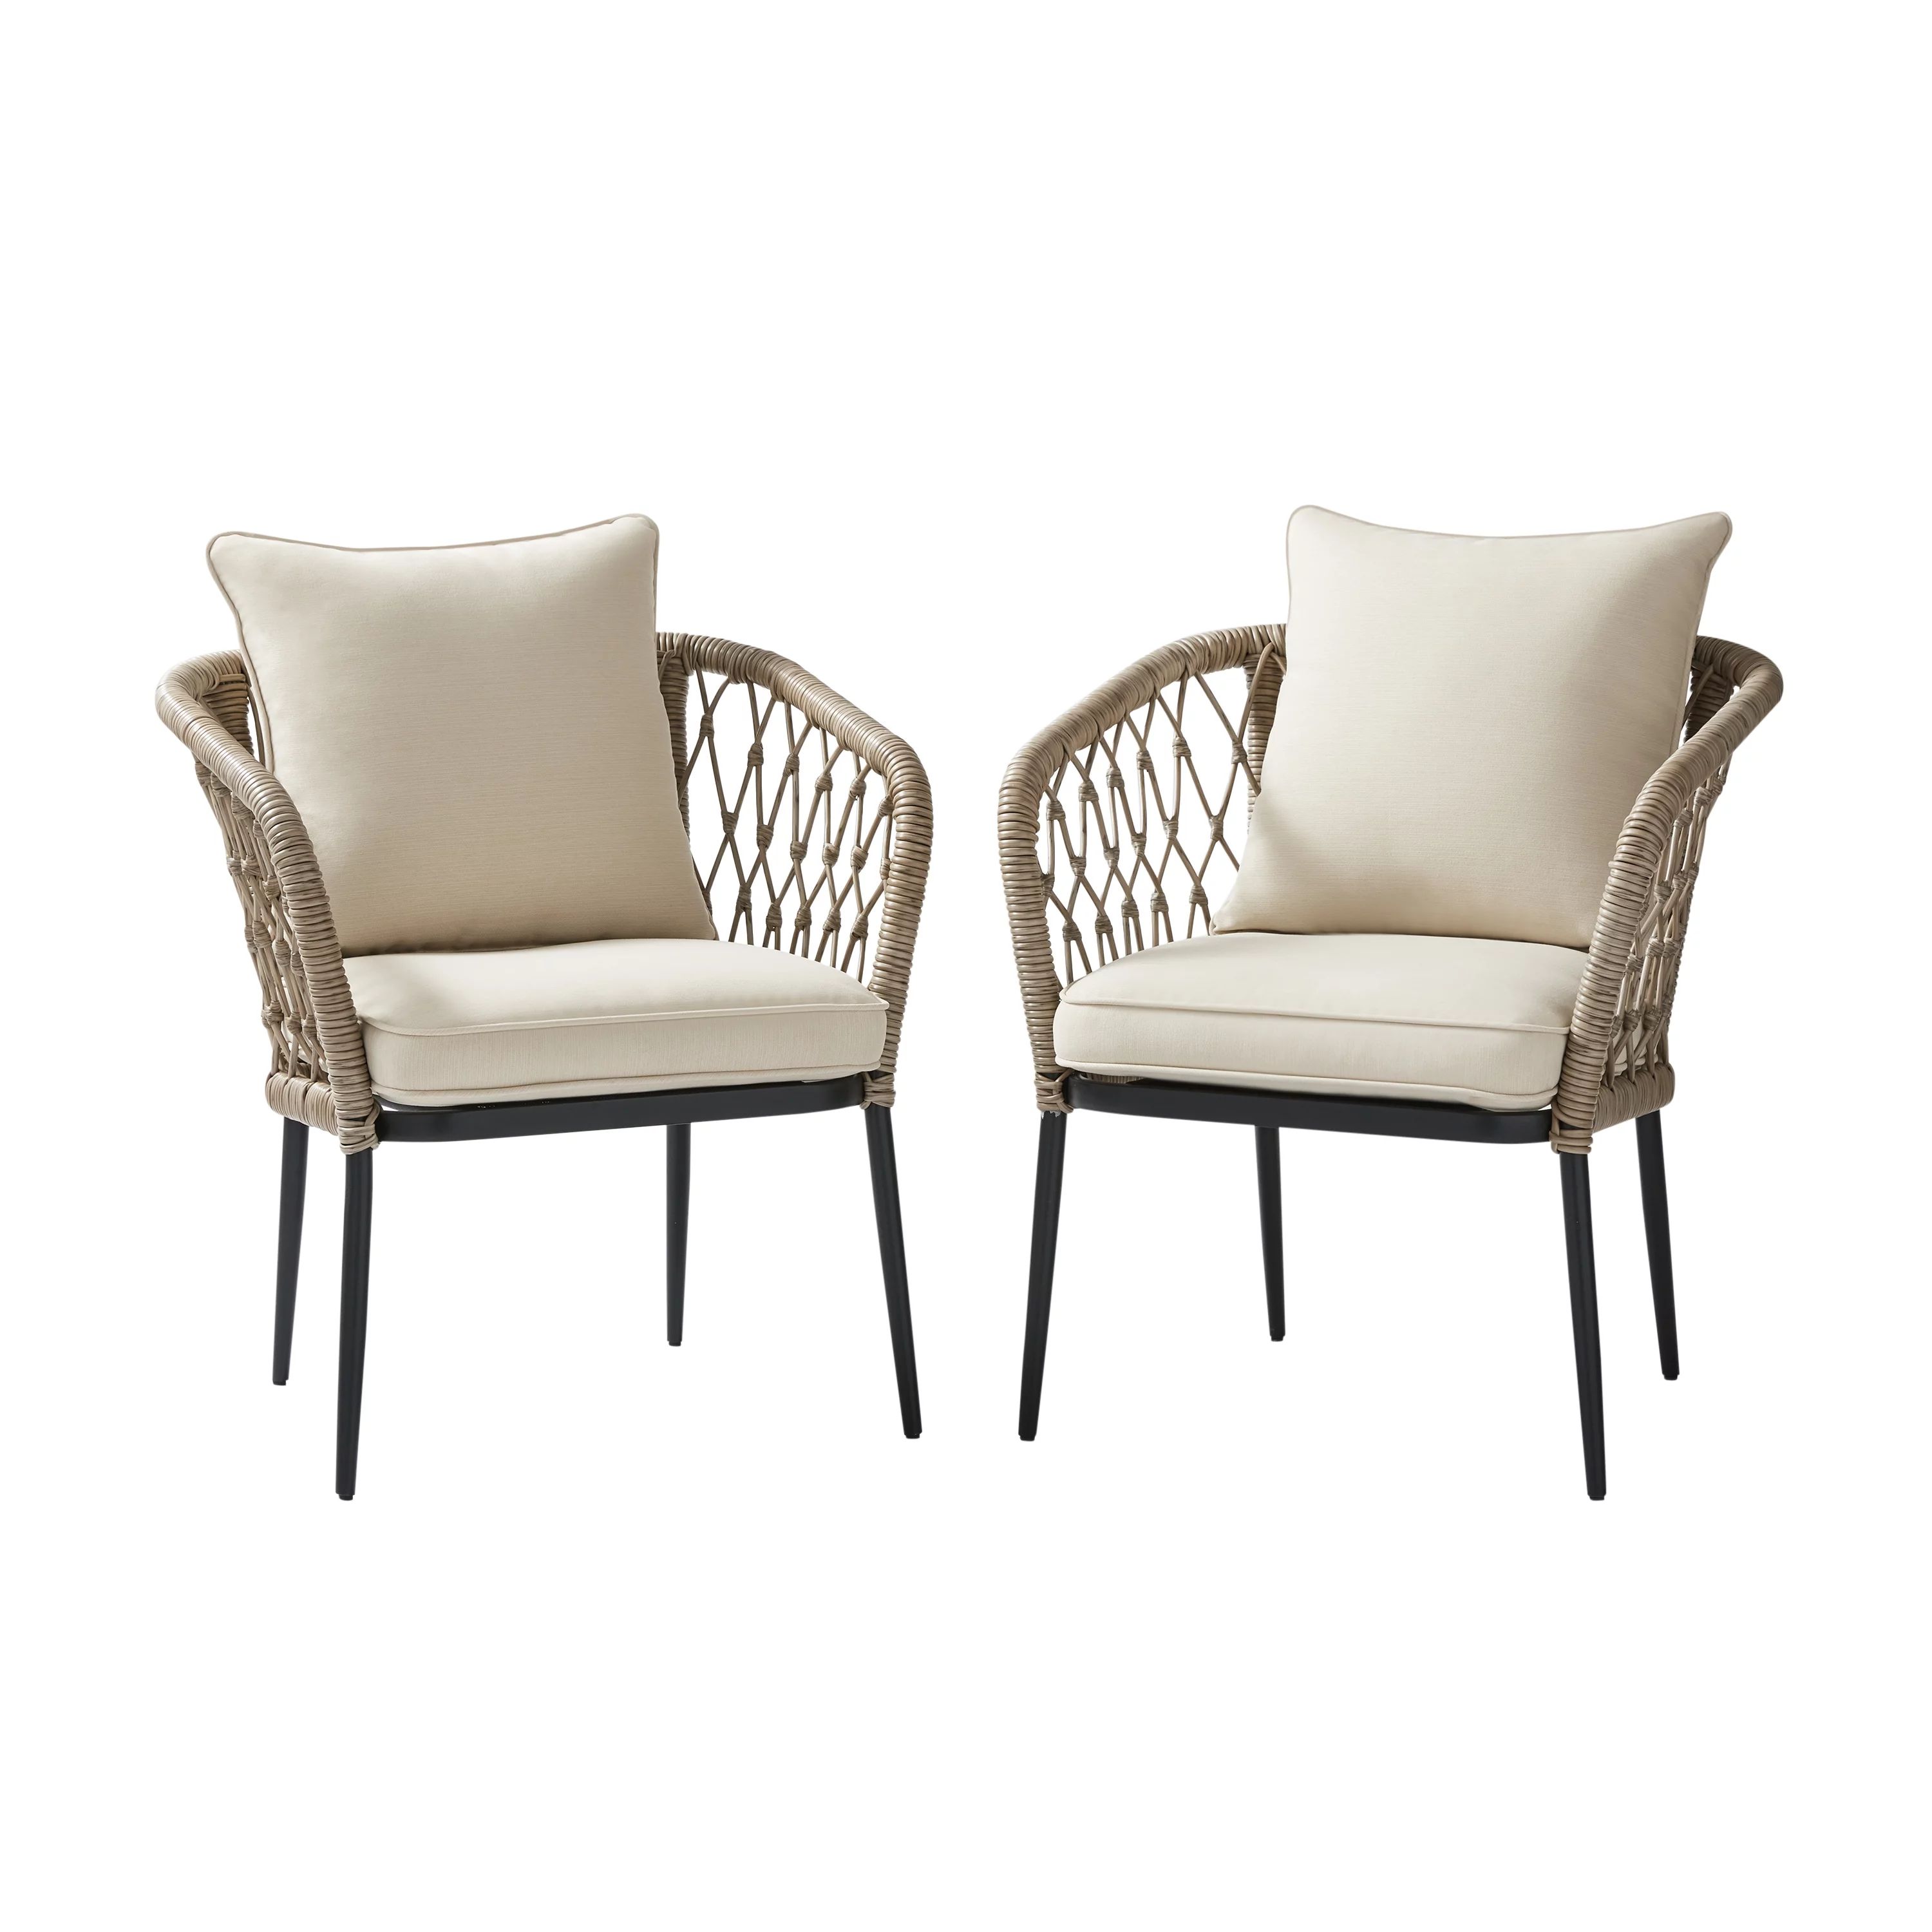 Better Homes & Gardens Kennedy Pointe Cushion Wicker Outdoor Lounge Chairs - Set of 2 - Beige/Bla... | Walmart (US)